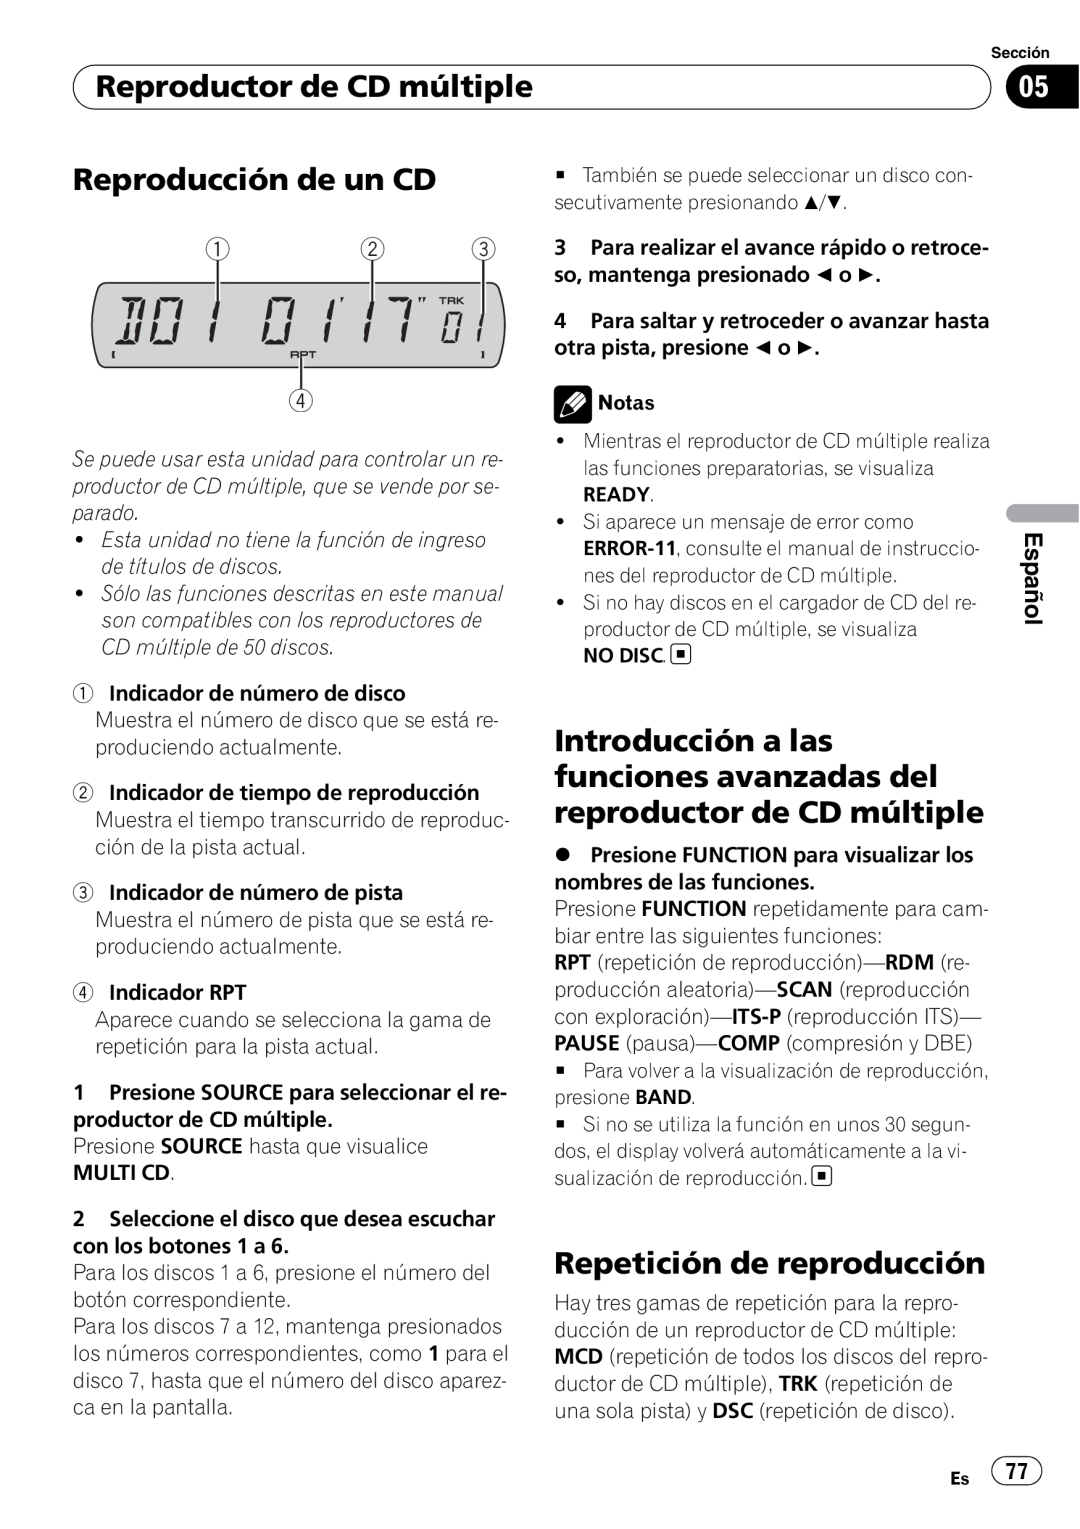 Sony DEH-P2900MP Reproductor de CD múltiple, Reproducción de un CD, Repetición de reproducción, 1 2, Español 